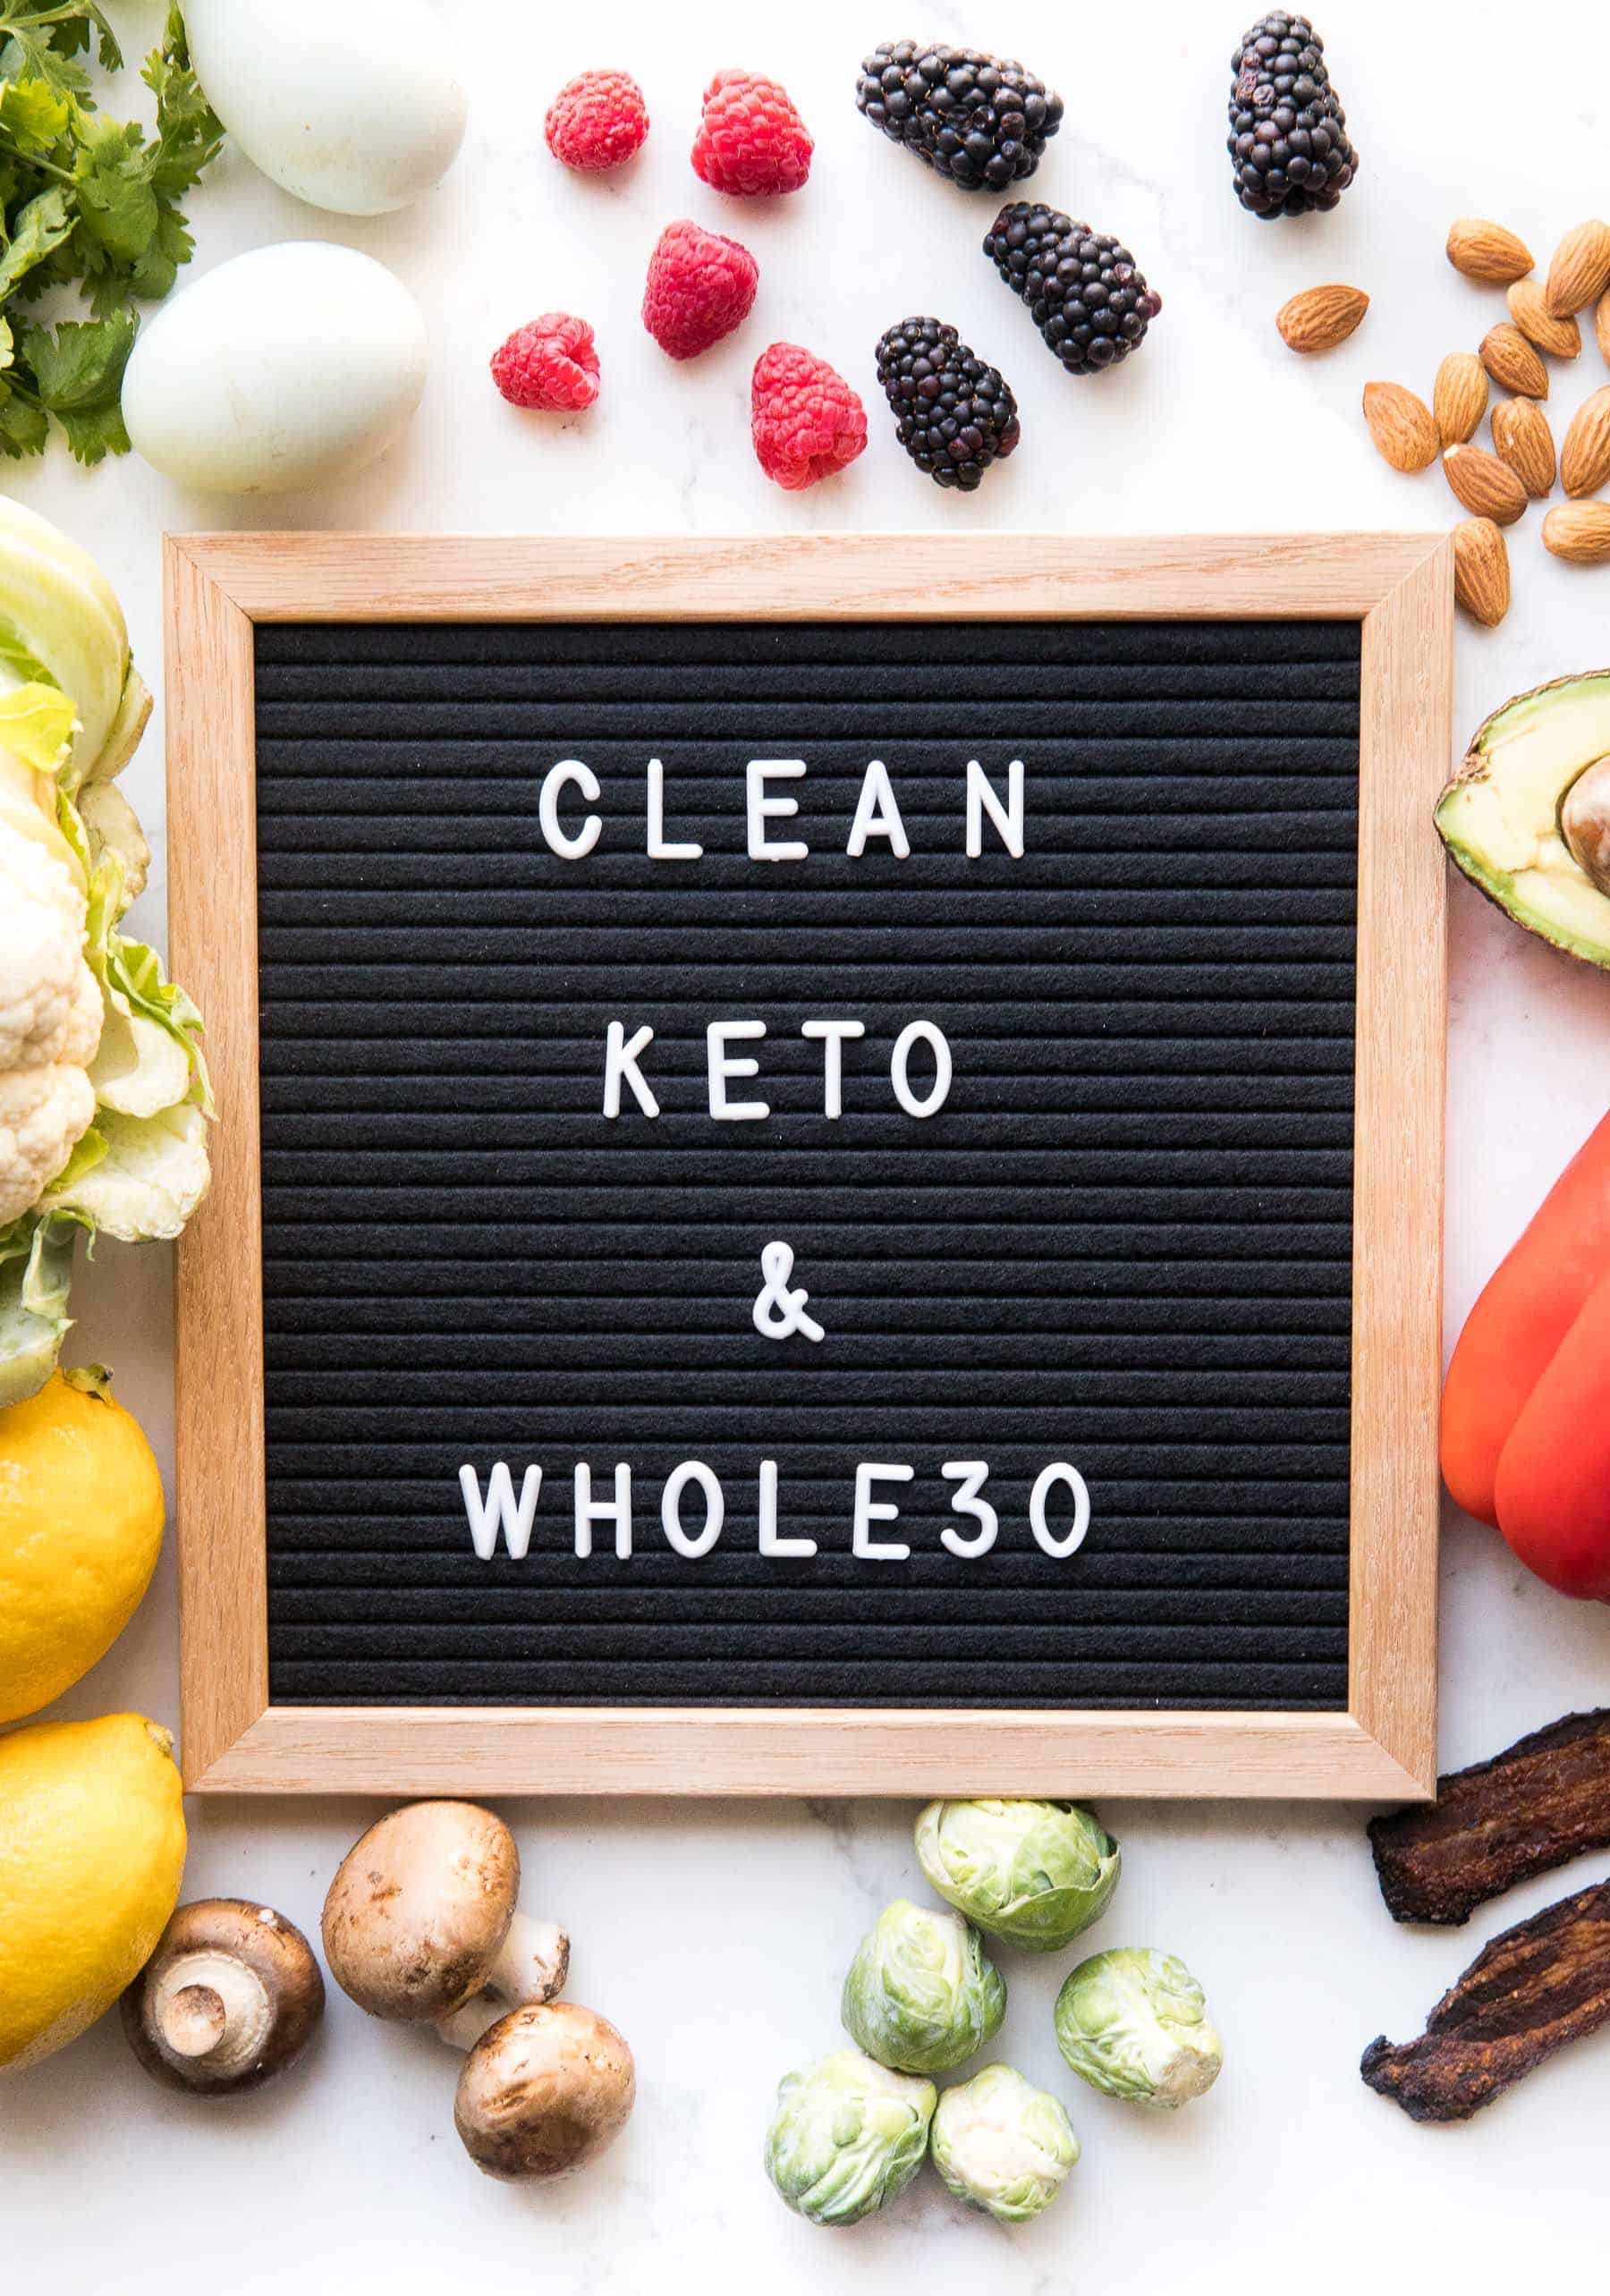 https://www.tasteslovely.com/wp-content/uploads/3000/09/The-Clean-Keto-Whole30-Foods-I-Eat-1.jpg